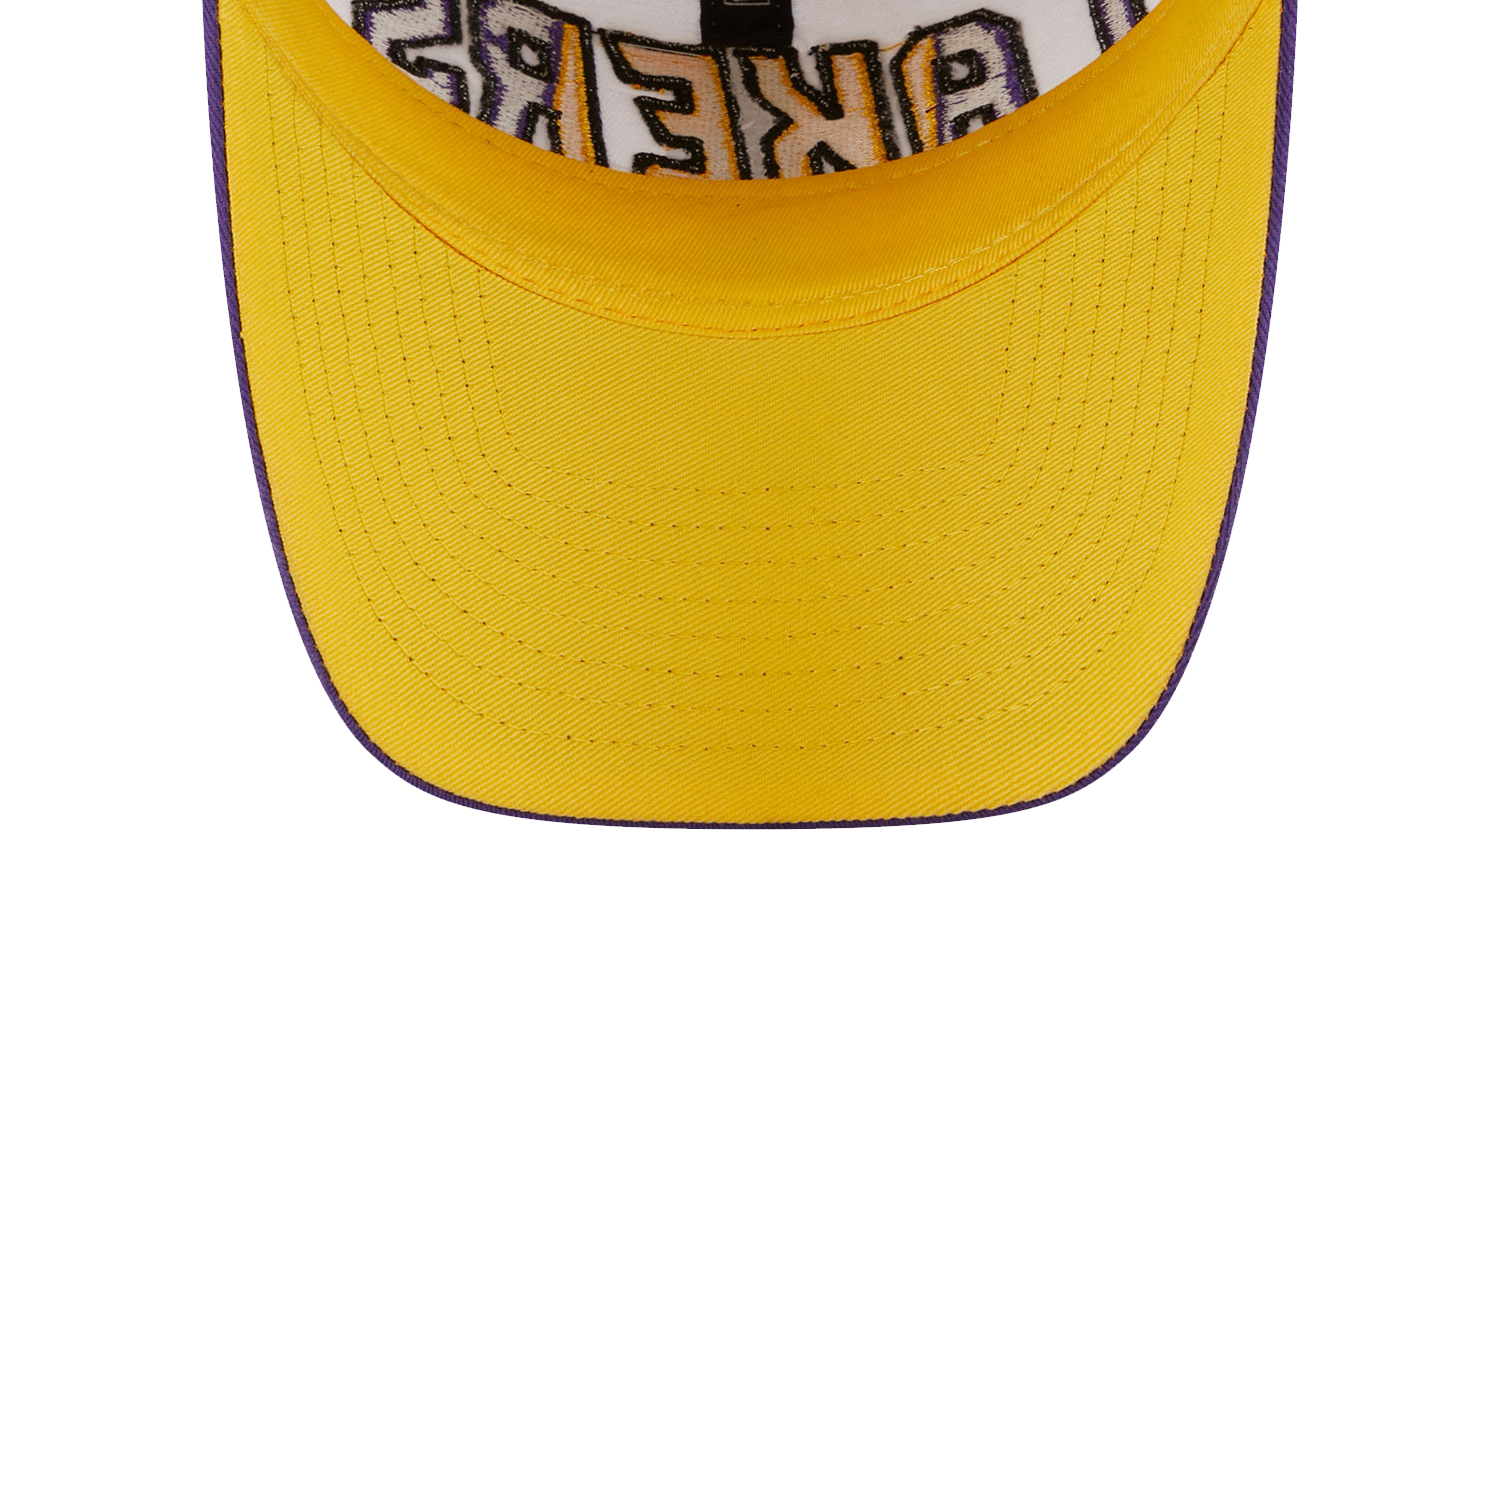 LA Lakers NBA Back Half Purple 9TWENTY Adjustable Cap